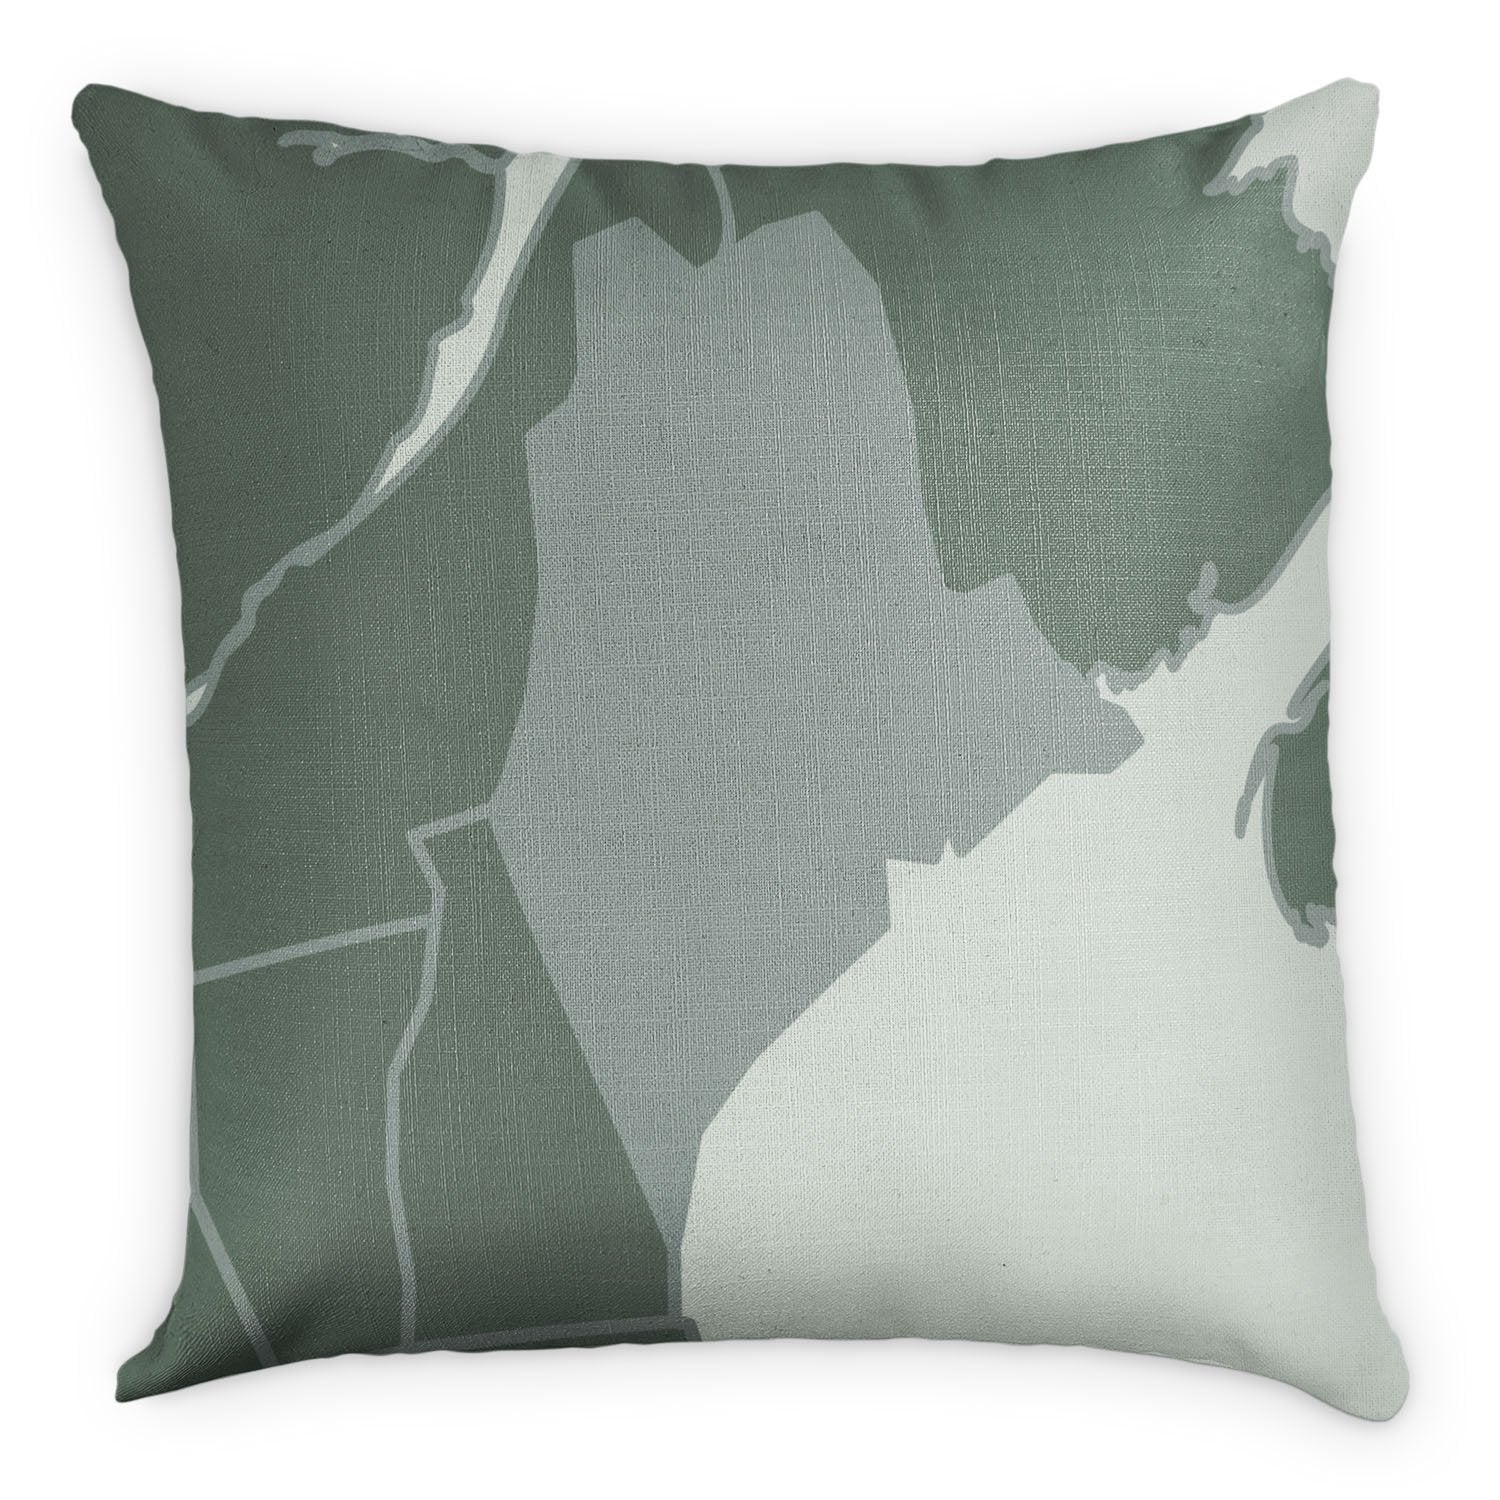 Maine Square Pillow - Linen -  - Knotty Tie Co.